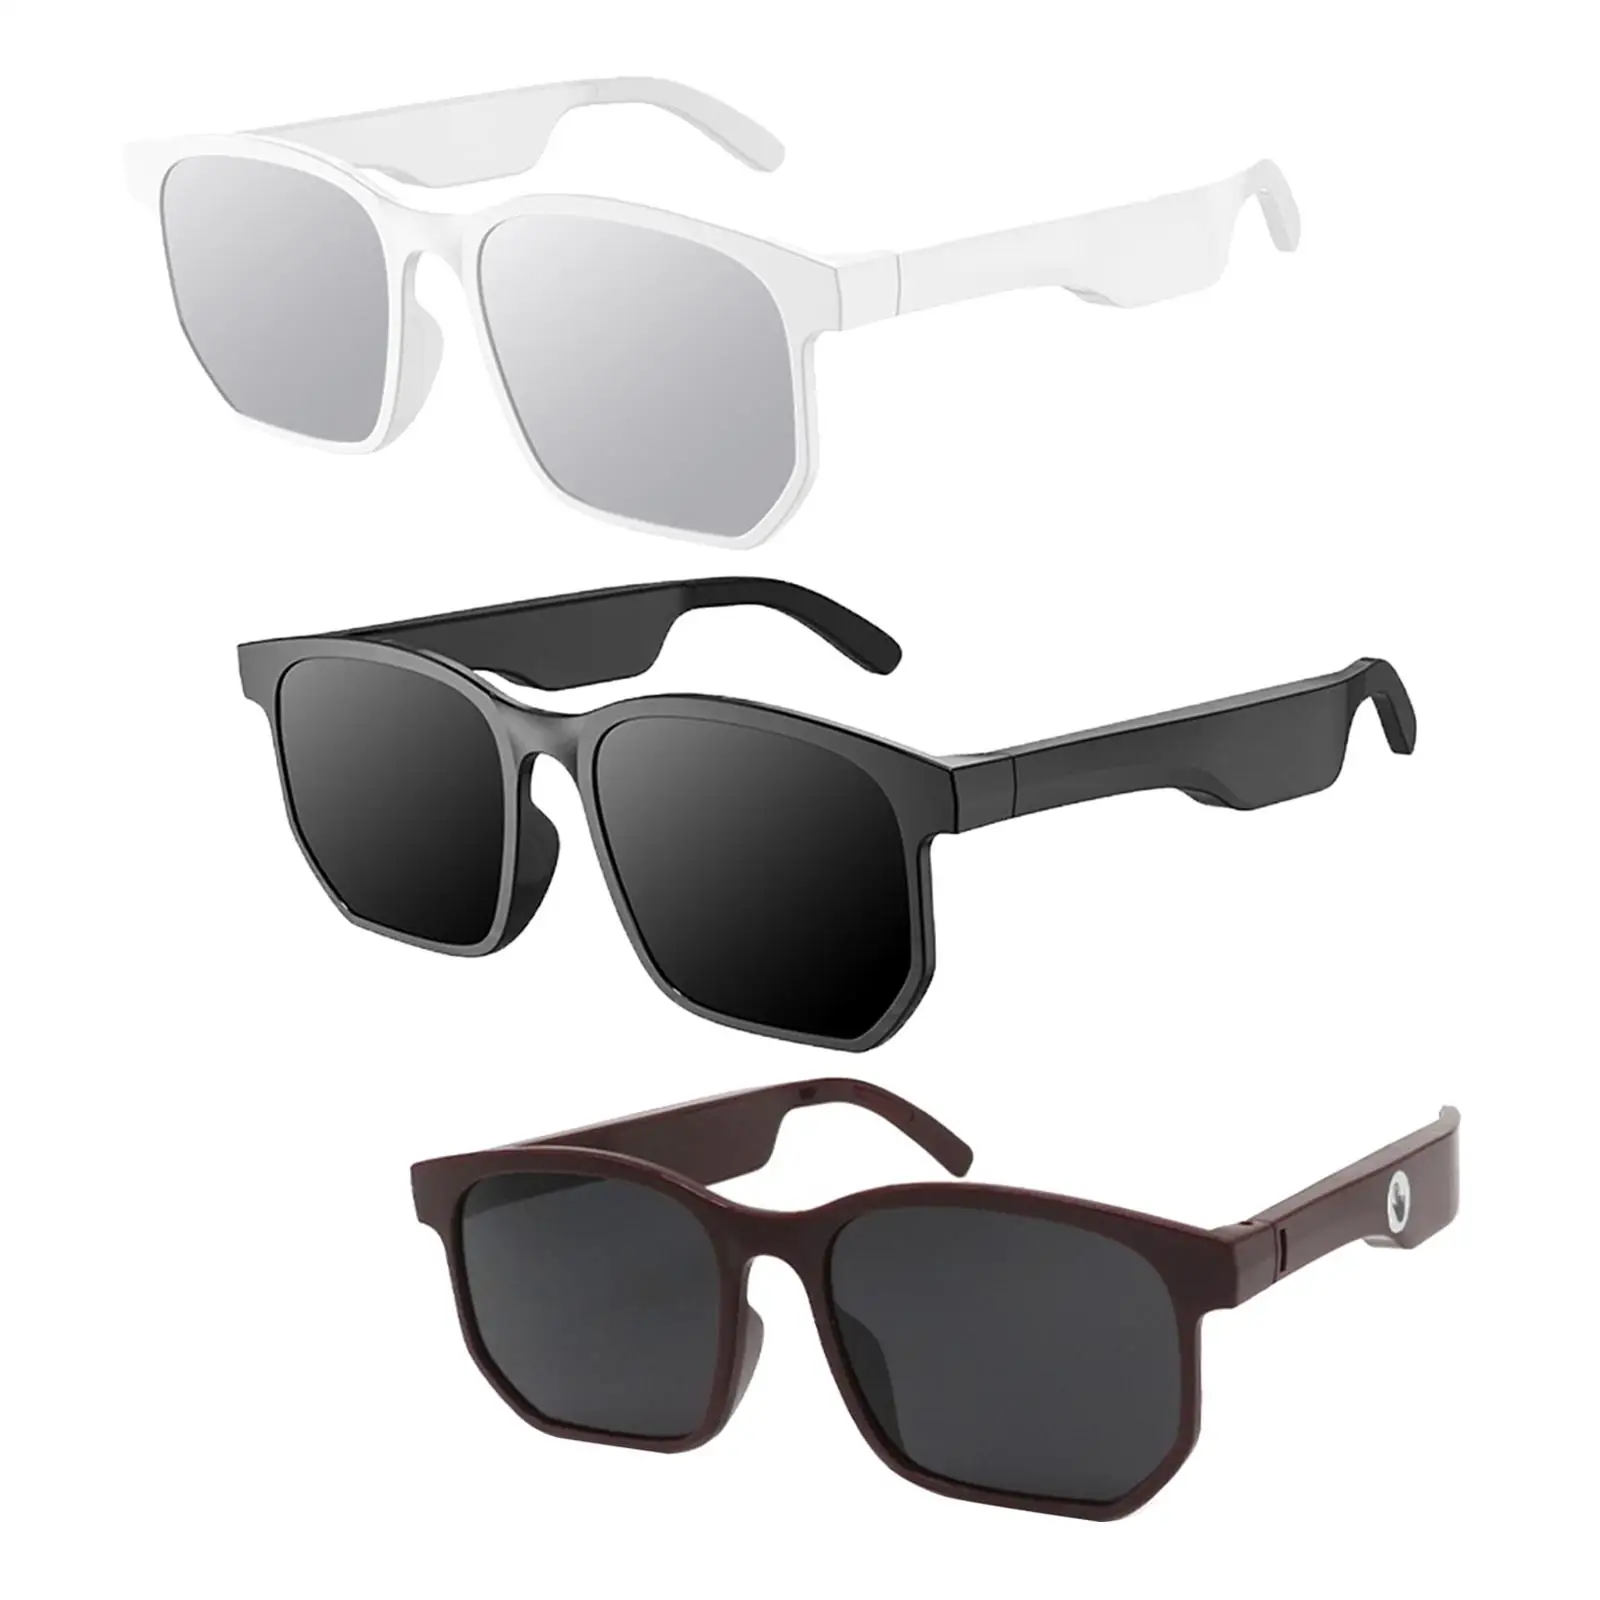 Bluetooth Audio Sunglasses Smart Glasses Open Ear Headphones V5.0 for Biking